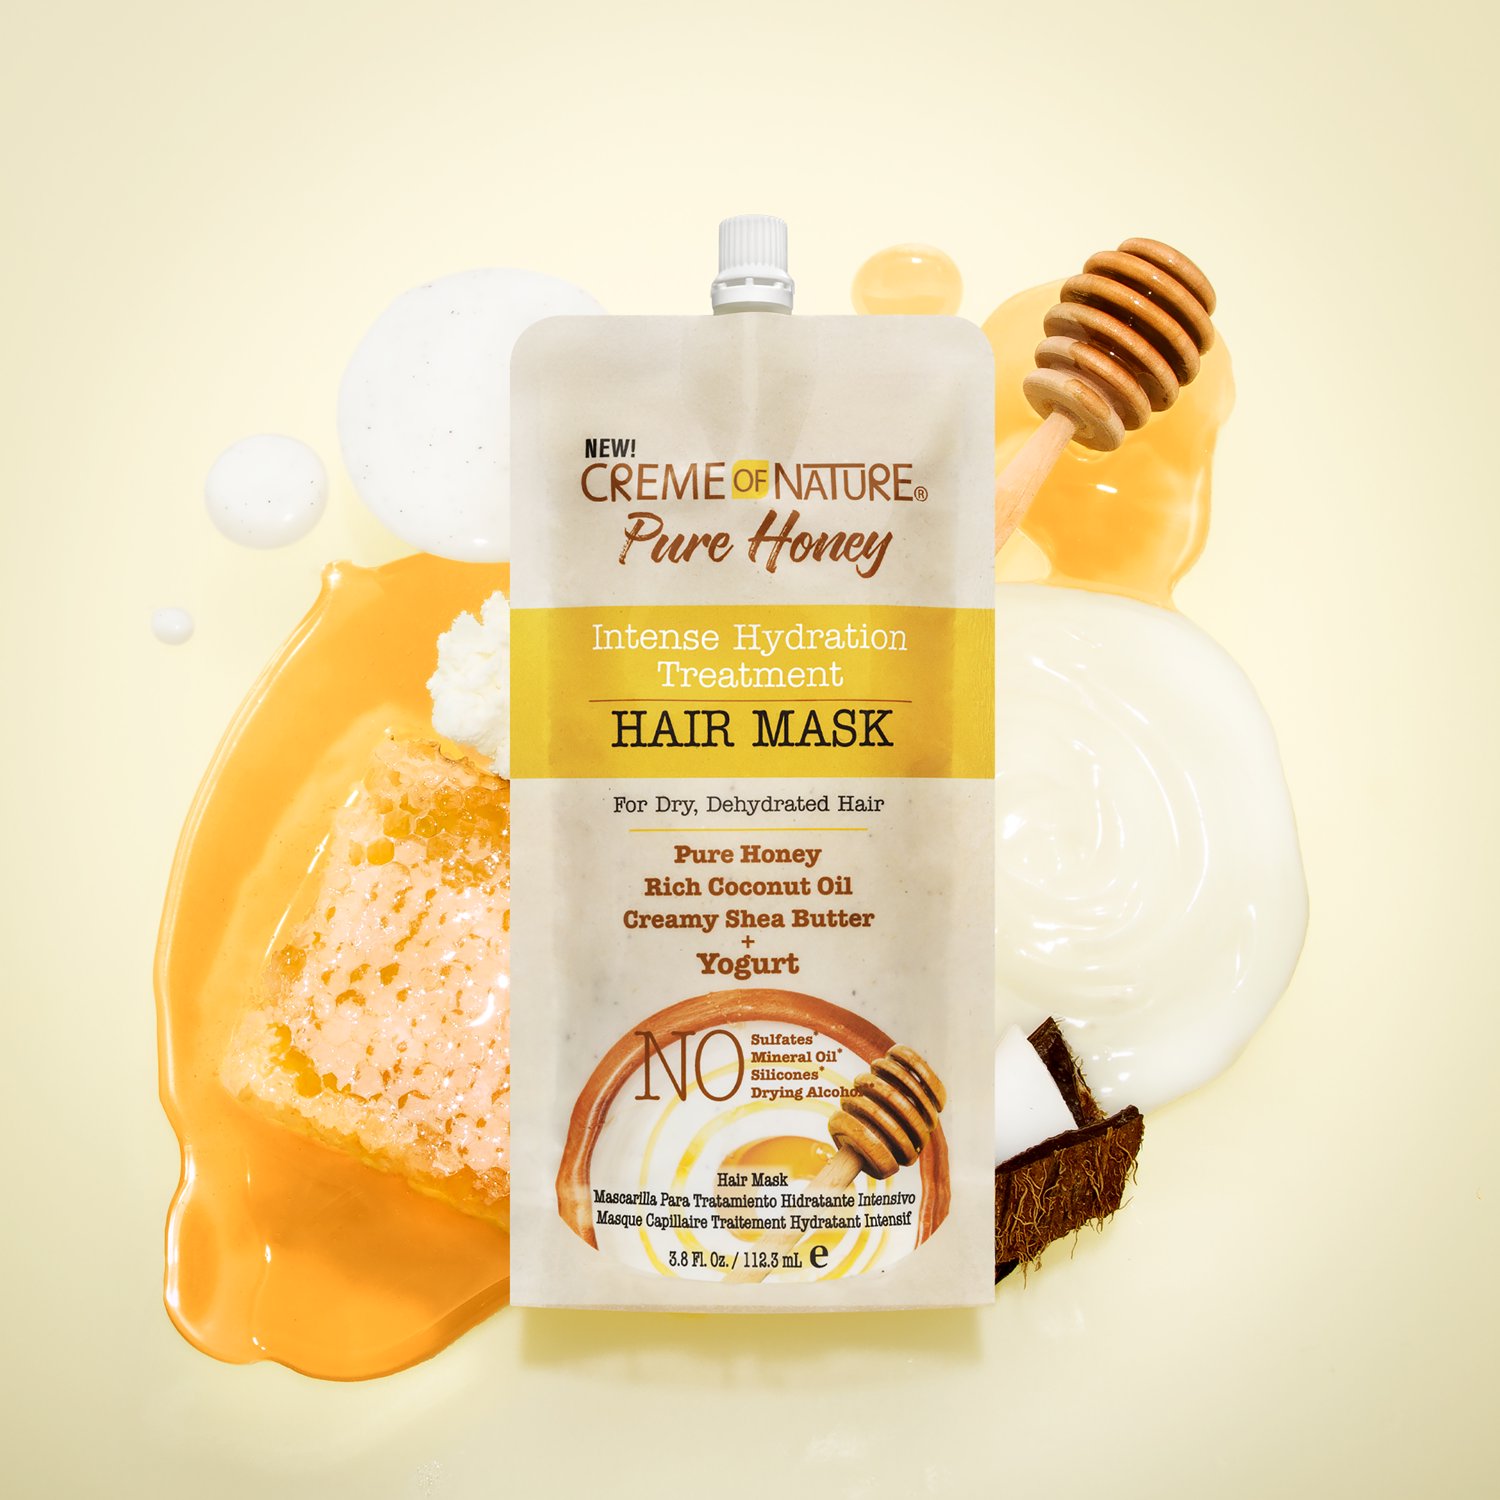 Creme of Nature Pure Honey Intense Hydration Treatment Hair Mask, 3.4 oz - image 5 of 8